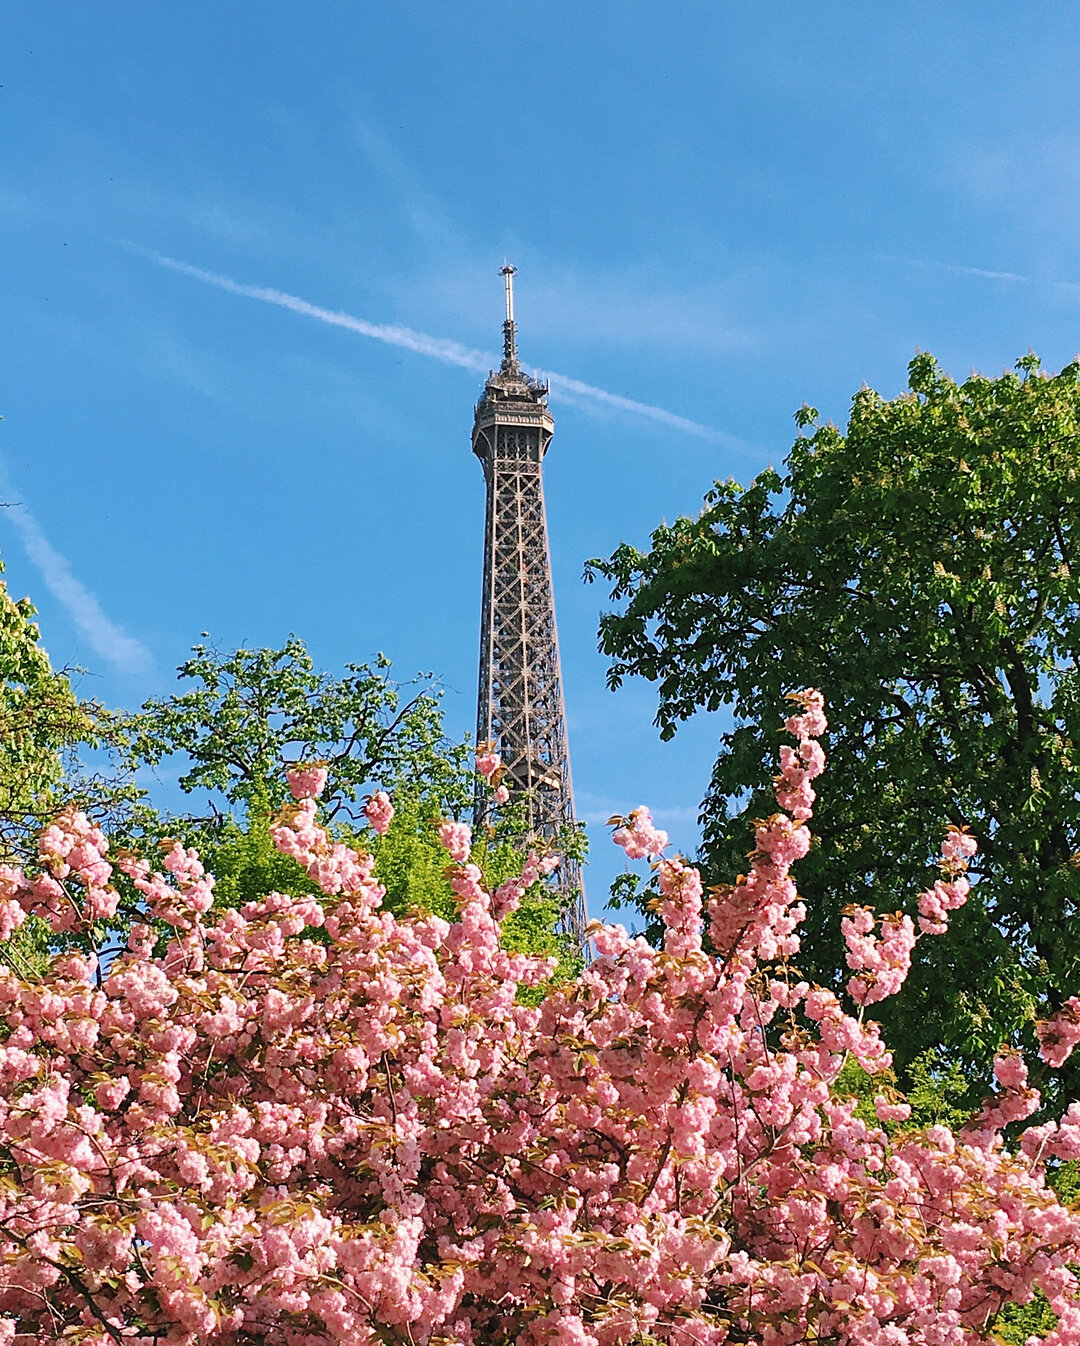 Cherry Blossoms in Paris .
.
.
.
.

#paris #parisian #france #eiffeltower #abdzphotochallenge #creativemornings #creativecommunity #hypebeast #thecreatorclass #instagram #lonelyplanet #cntraveler #thefadmia #culturetrip #fubiz #abduzeedo #artofvisual